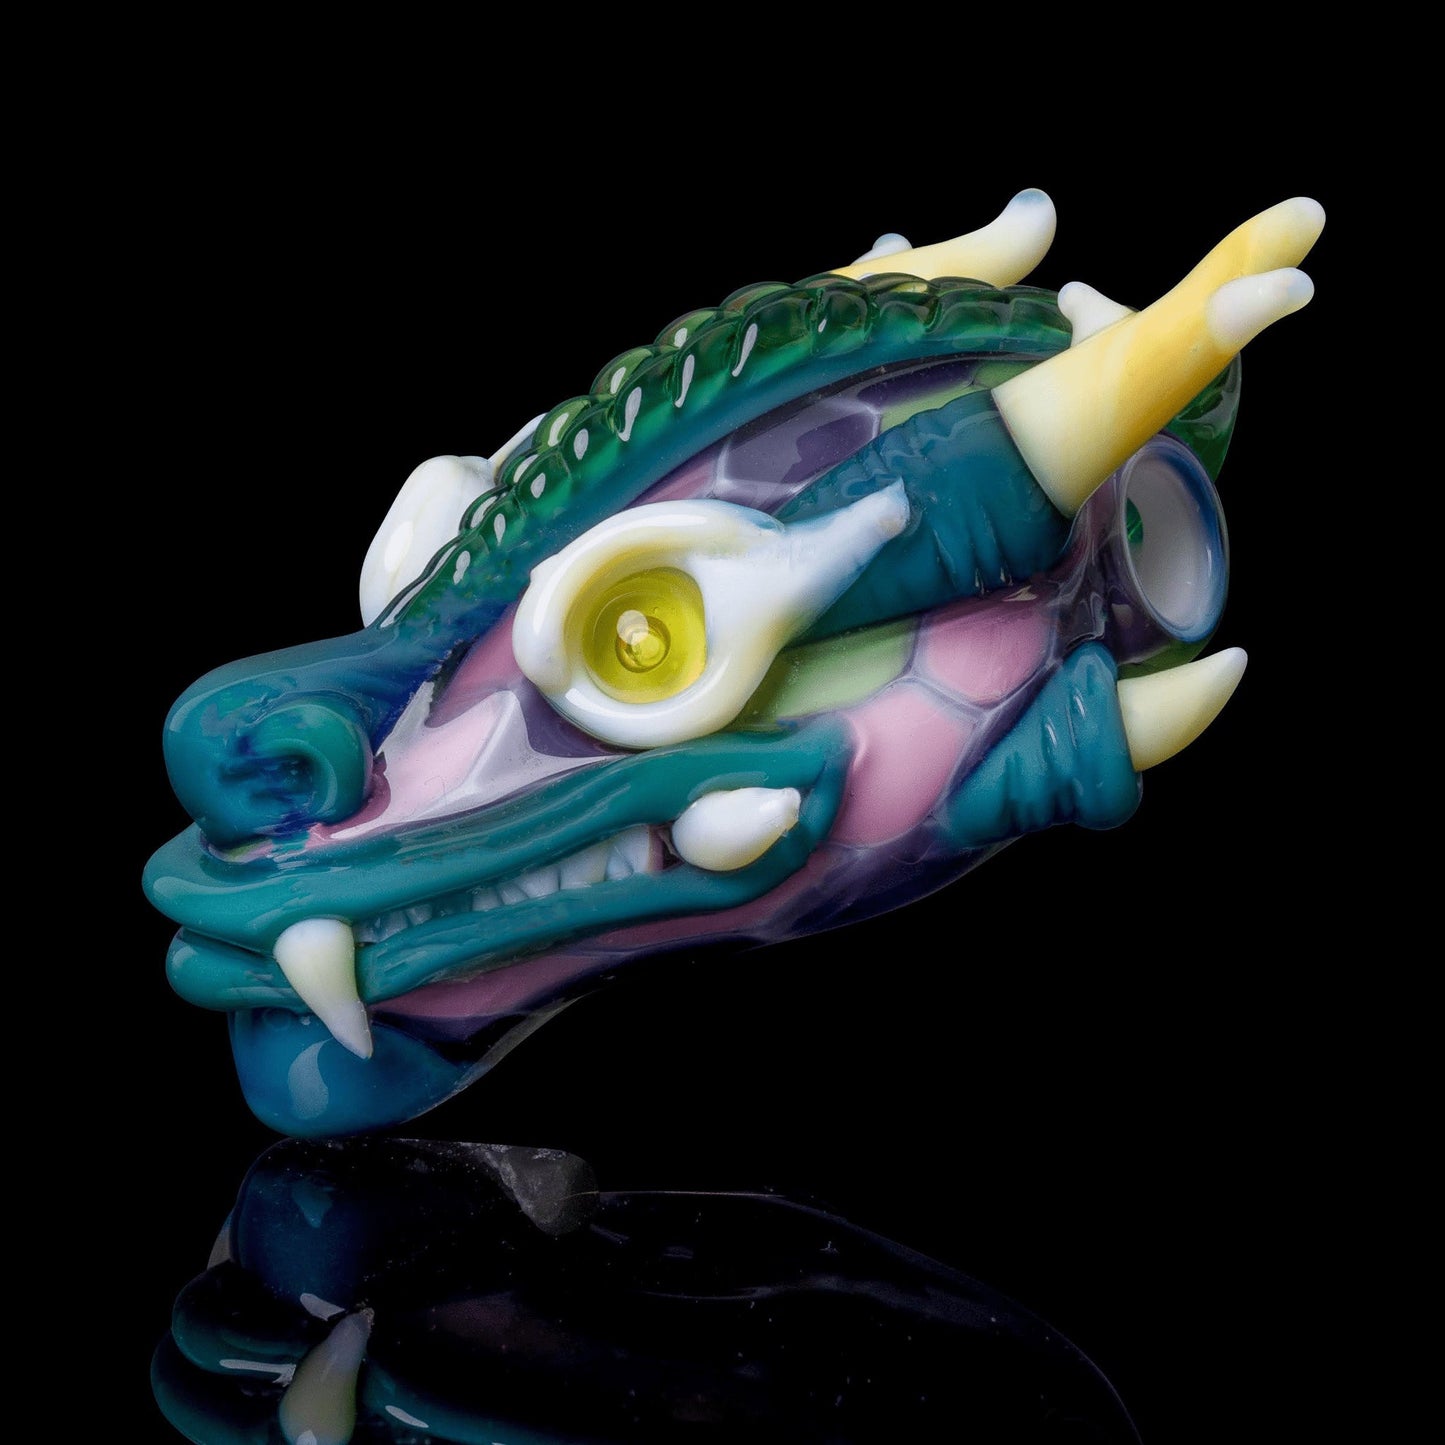 hand-blown glass pendant - Tropic Berry Dragonhead Pendant by Nathan Belmont (Belmont’s Beasts)